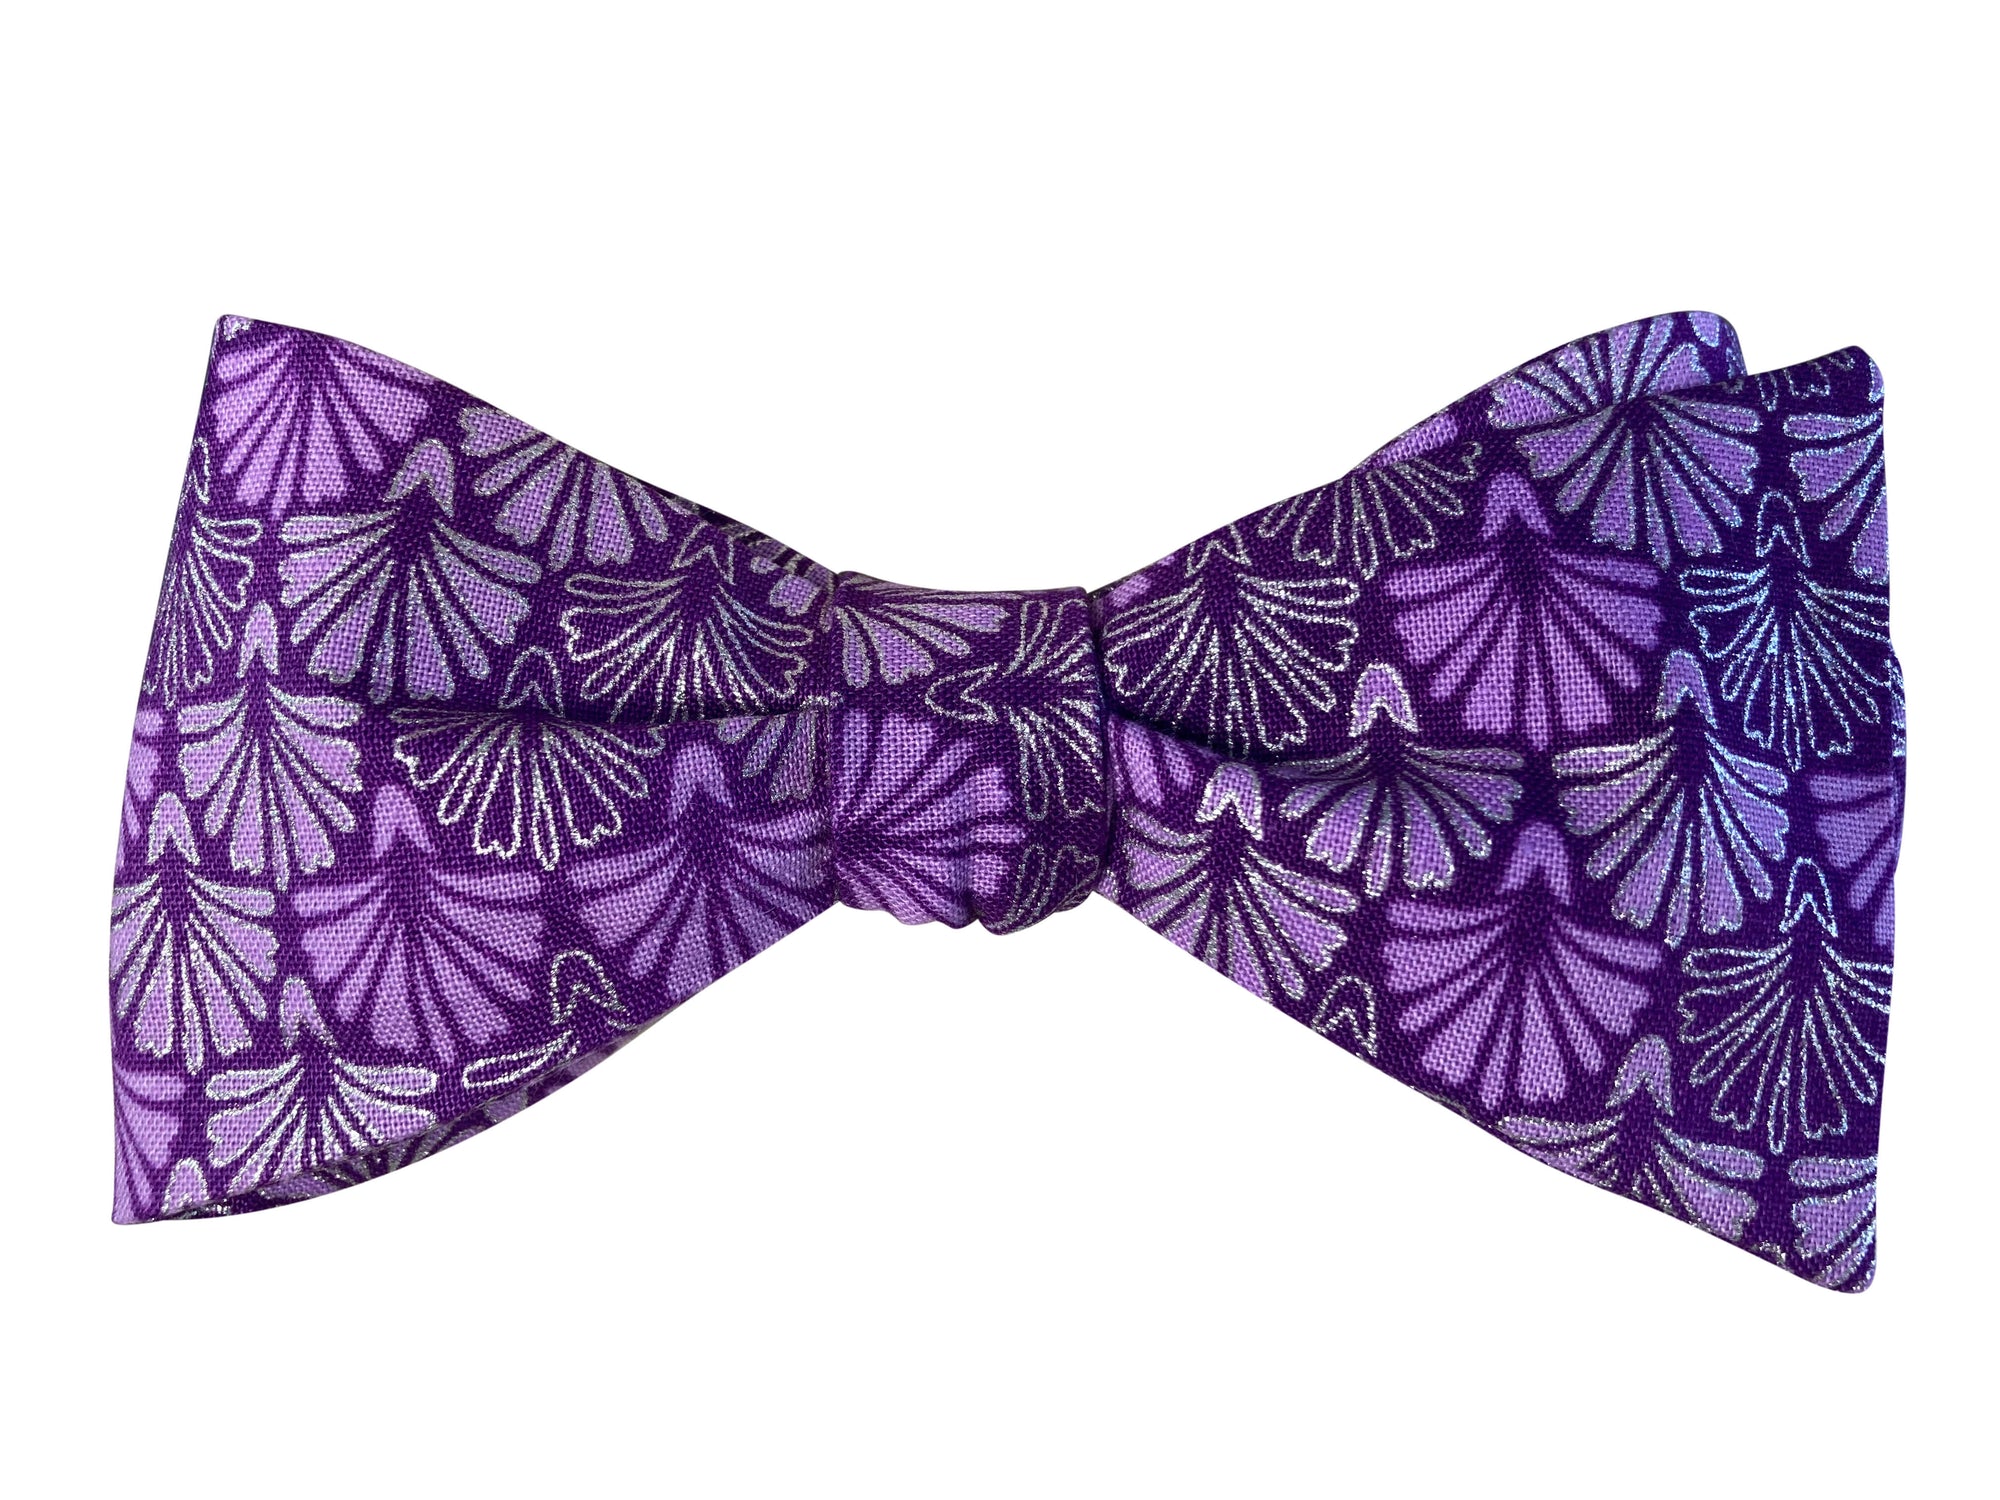 Purple and silver bridgerton style self tie bow tie